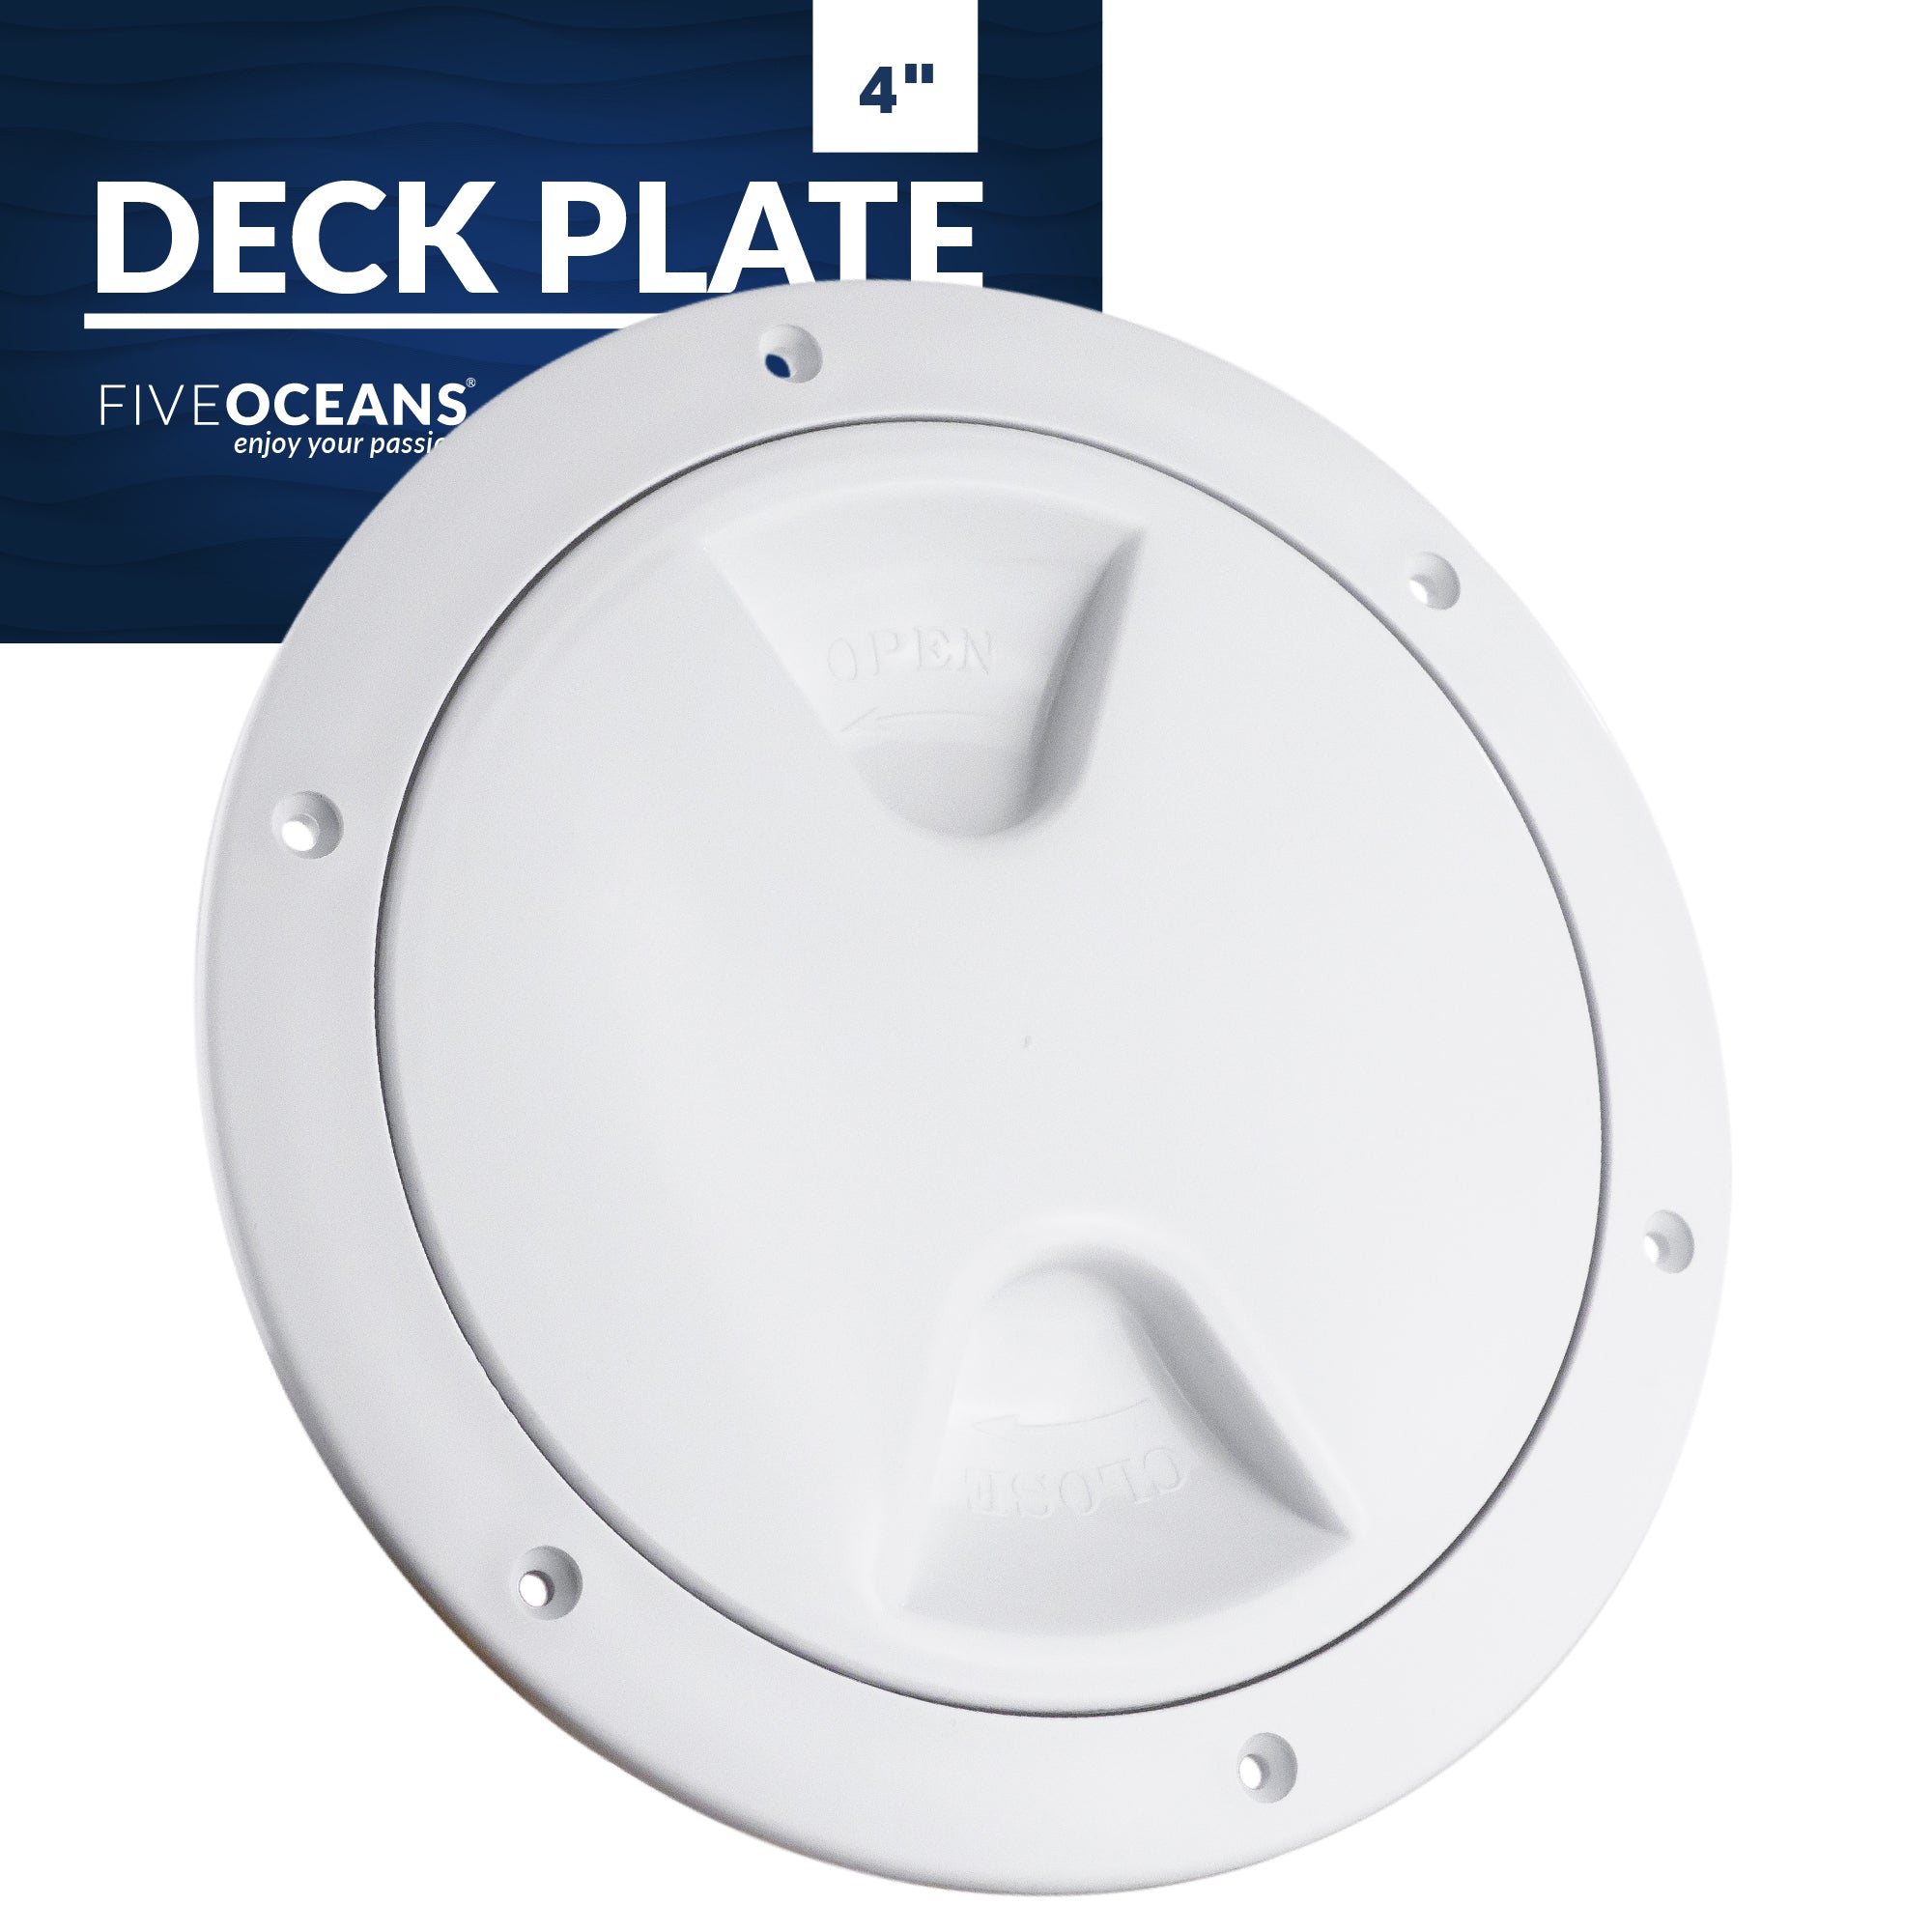 4" Deck Plate, Round, White - FO296